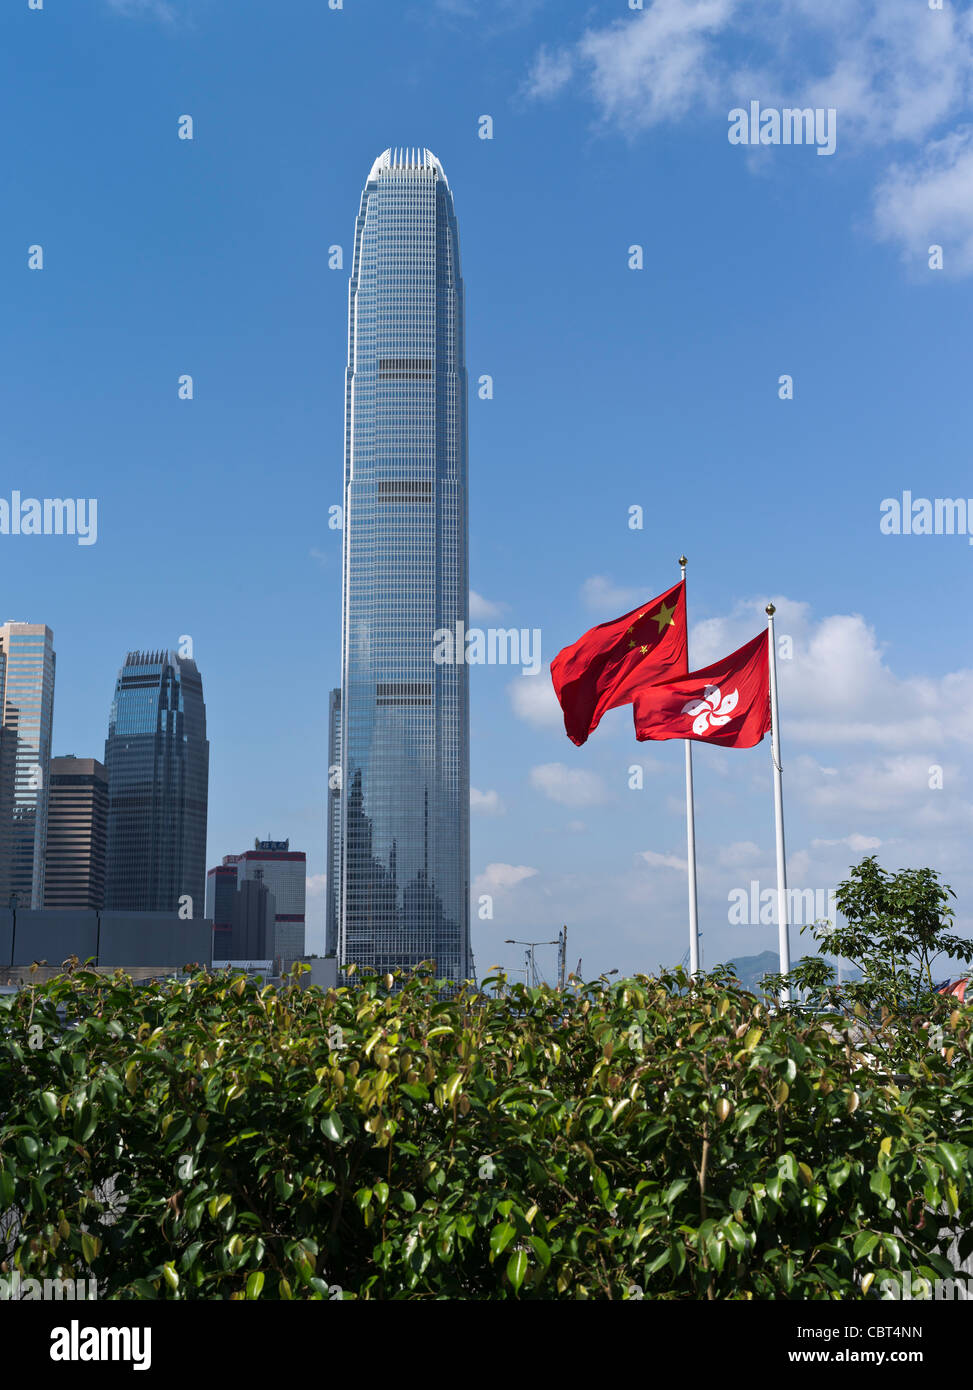 dh Internationales Finanzzentrum ZENTRAL HONGKONG Chinesische Flagge und Hongkong Flaggen Moderne IFC 2 Gebäudearchitektur china Tower Buildings Stockfoto